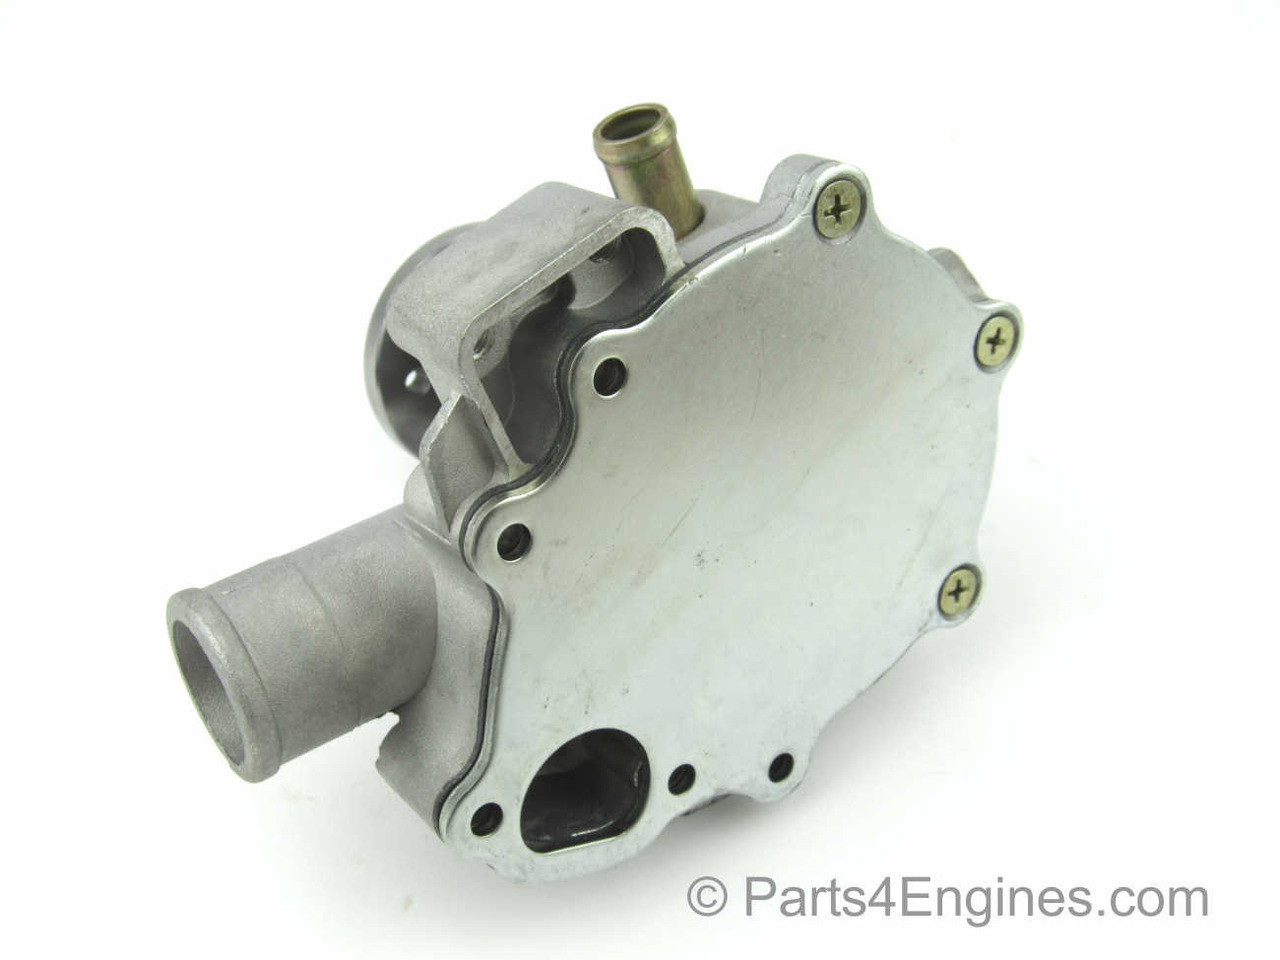 Perkins M35, MC42 KE, KF & KR engine codes (rear view) - parts4engines.com